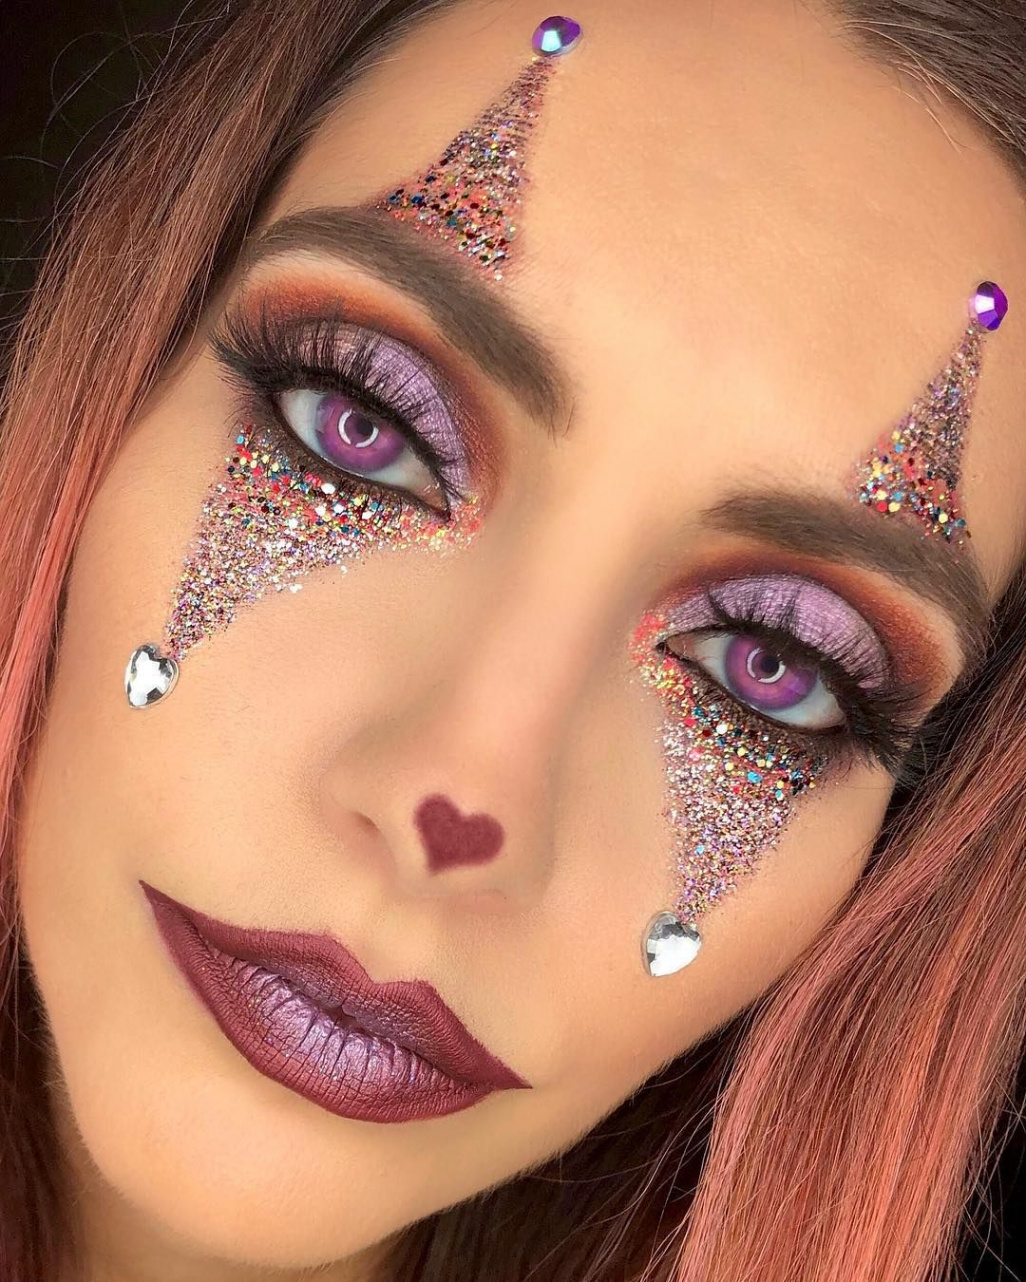 Christa Rice on Instagram: "🤡Glitter Glam Clown 🤡 Makeup details